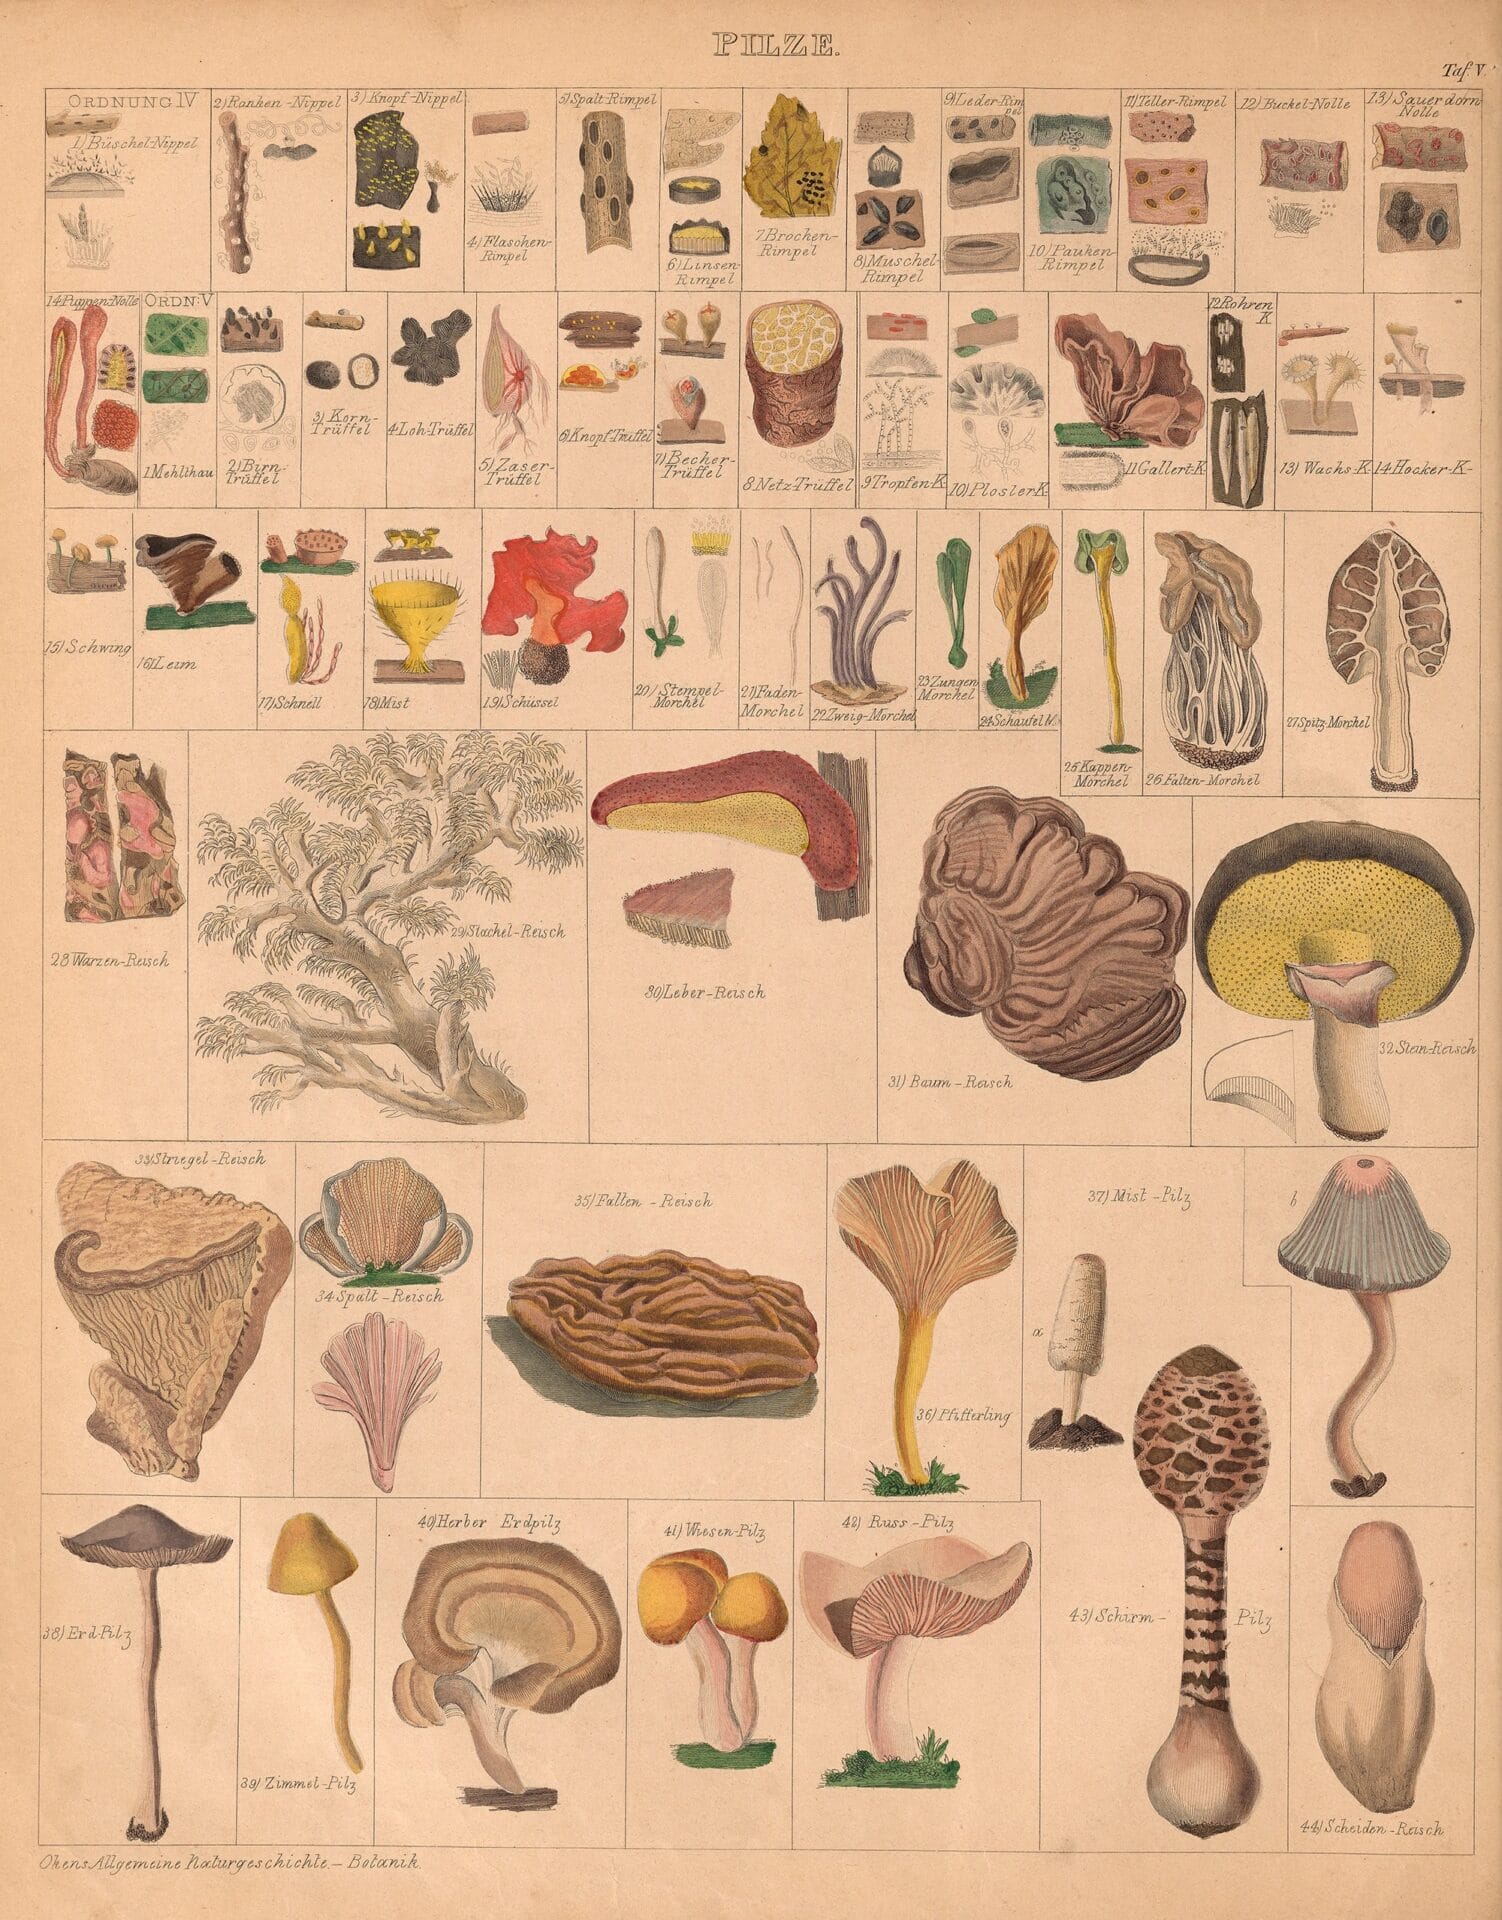 an 18th-century natural history book illustration of mushrooms